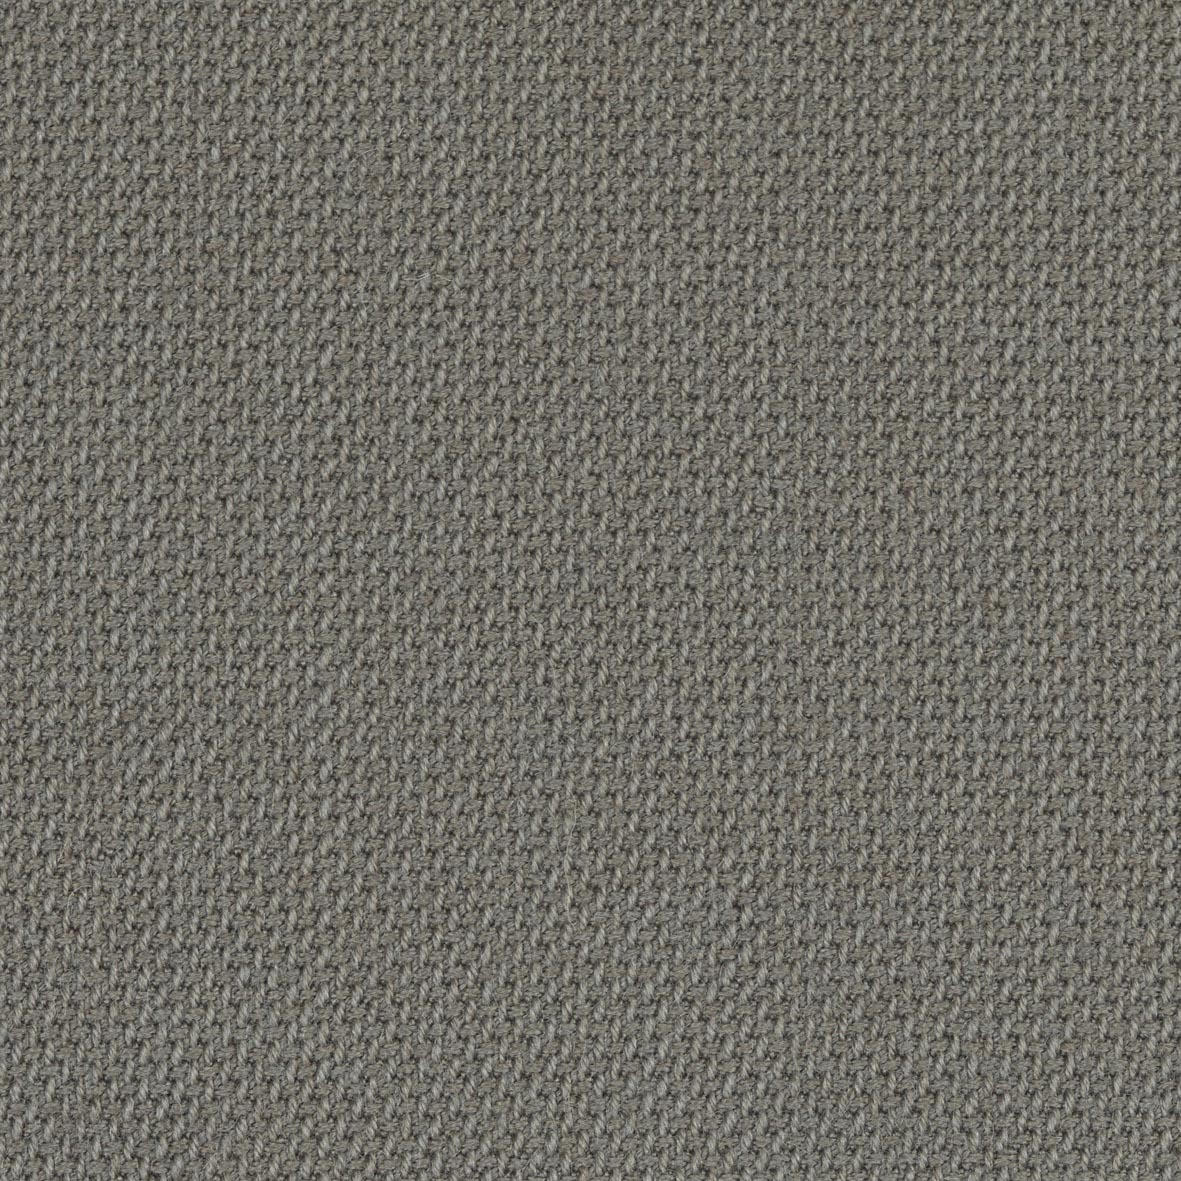 BÜROHOCKER Wollmischung Grau, Weiß  - Weiß/Grau, Basics, Textil/Metall (55/45,66/55cm) - Aeris